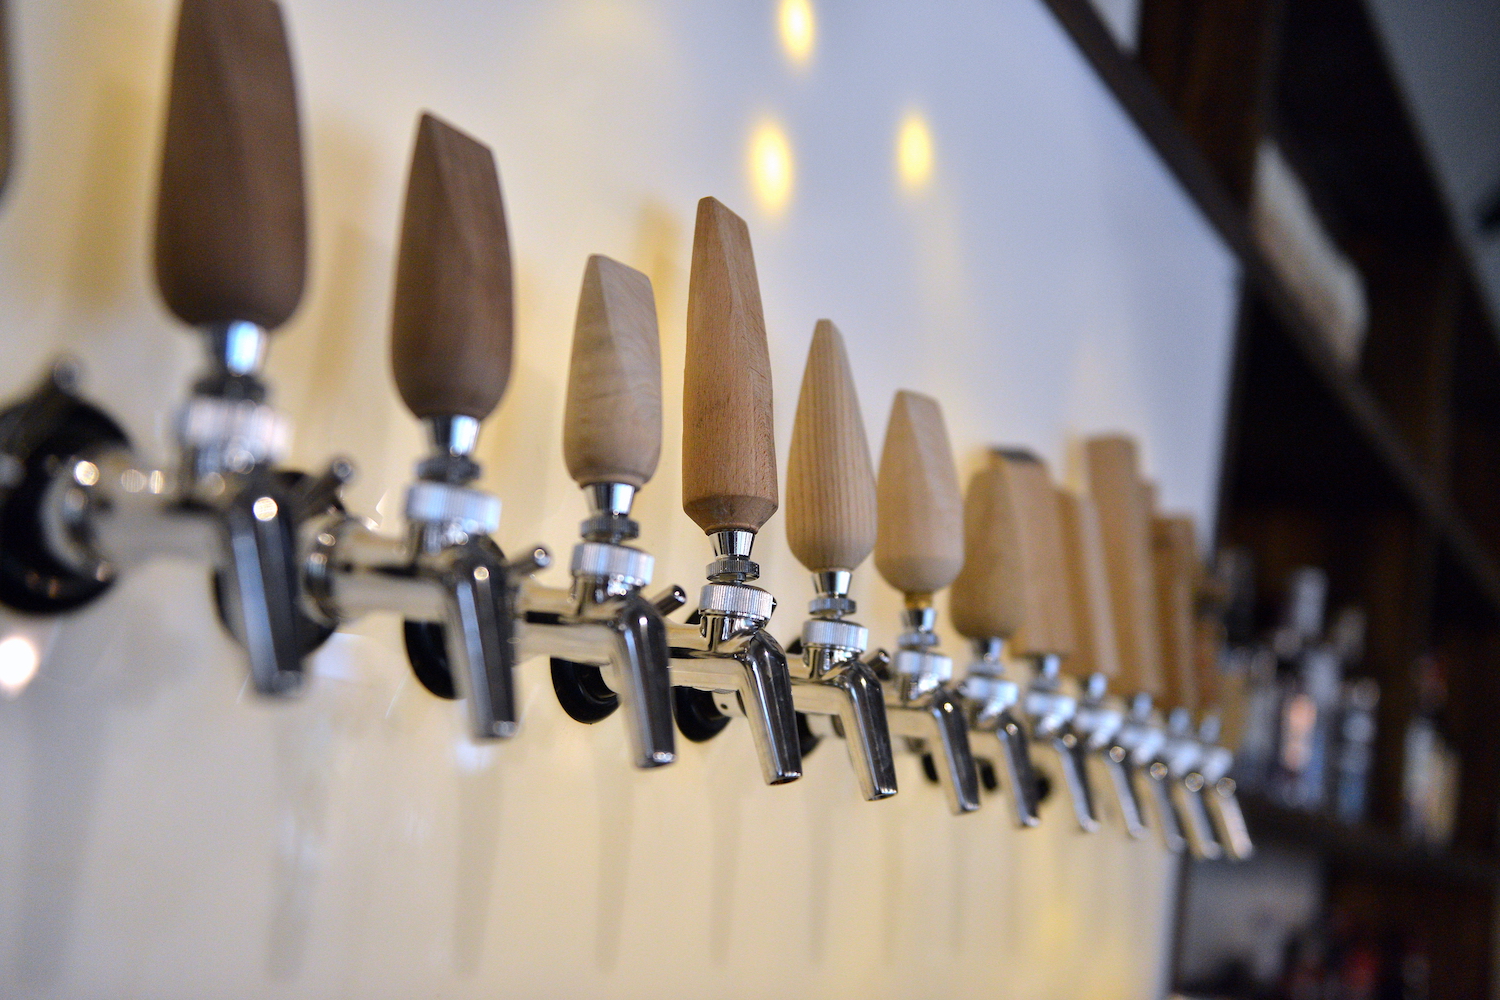 Photo of tap handles